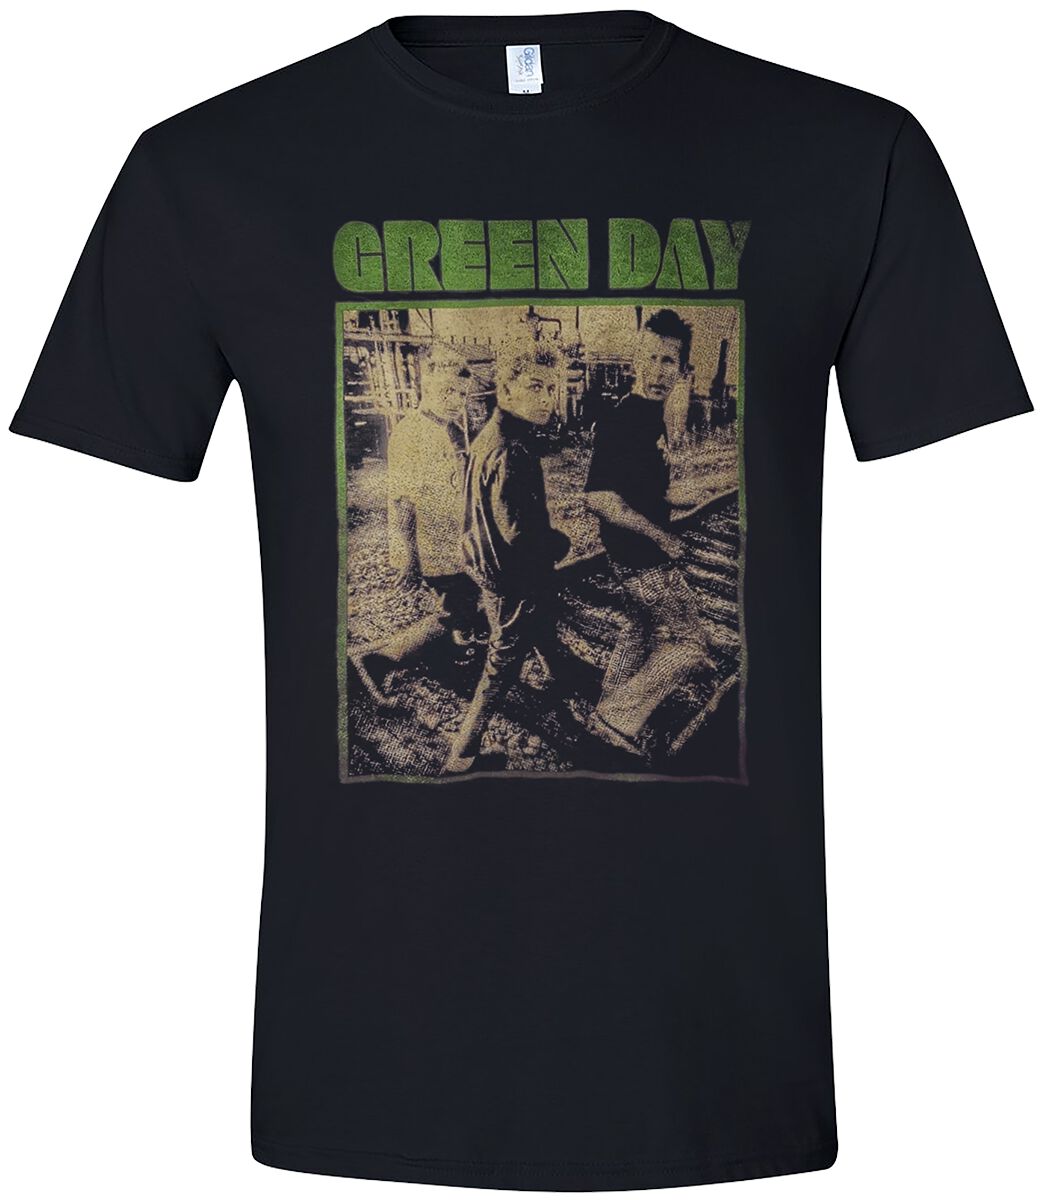 Green Day Train Tracks Revolution T-Shirt schwarz in S